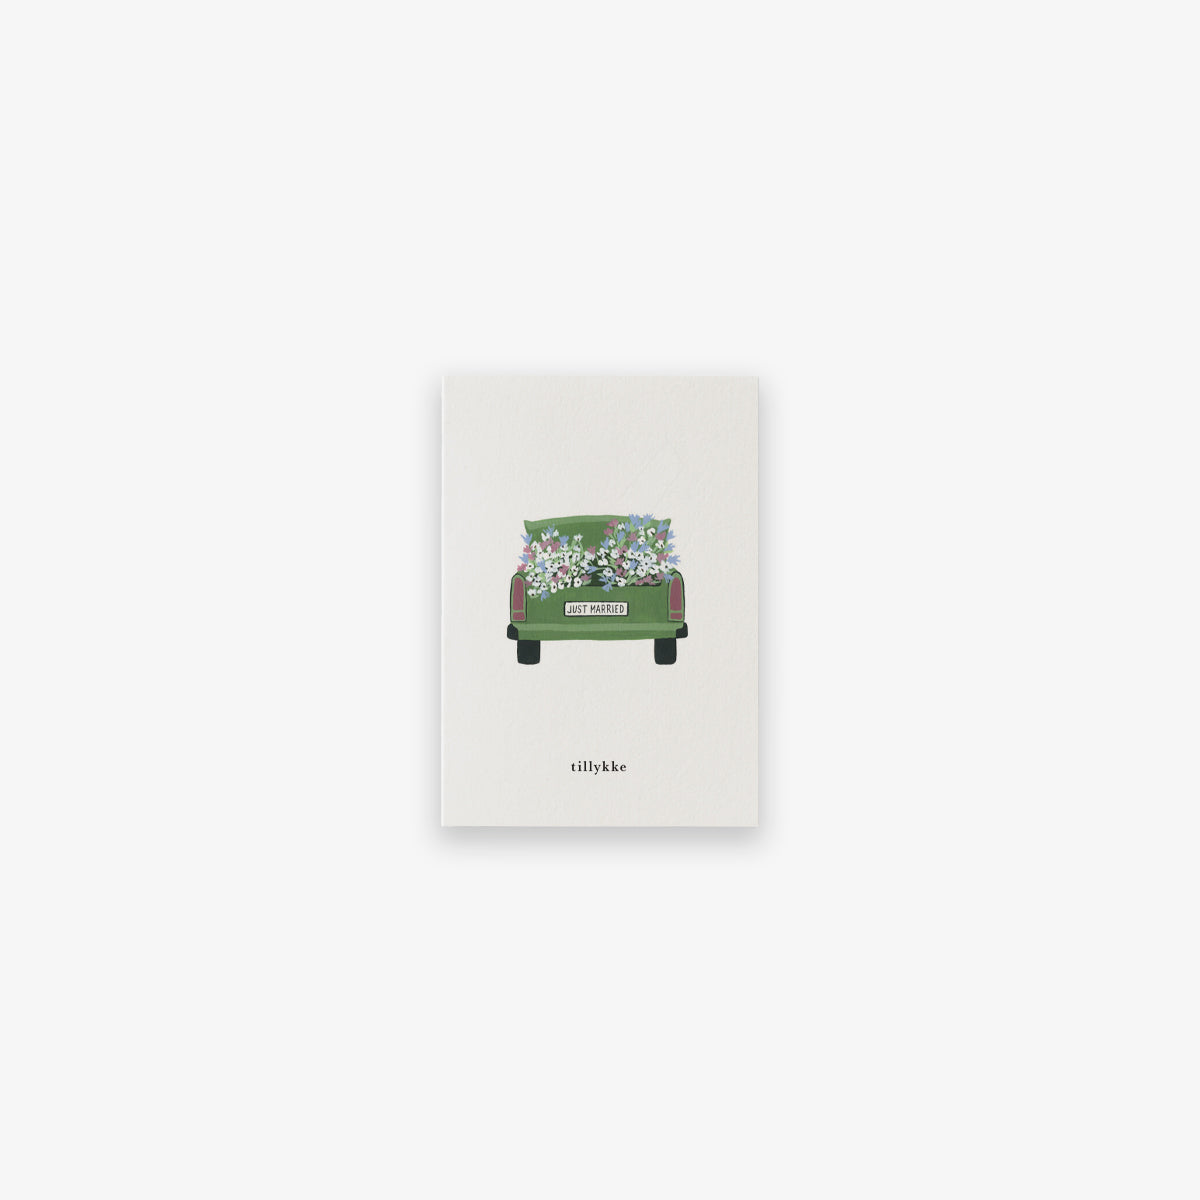 SMALL GREETING CARD // BRYLLUPSBIL (DANISH)